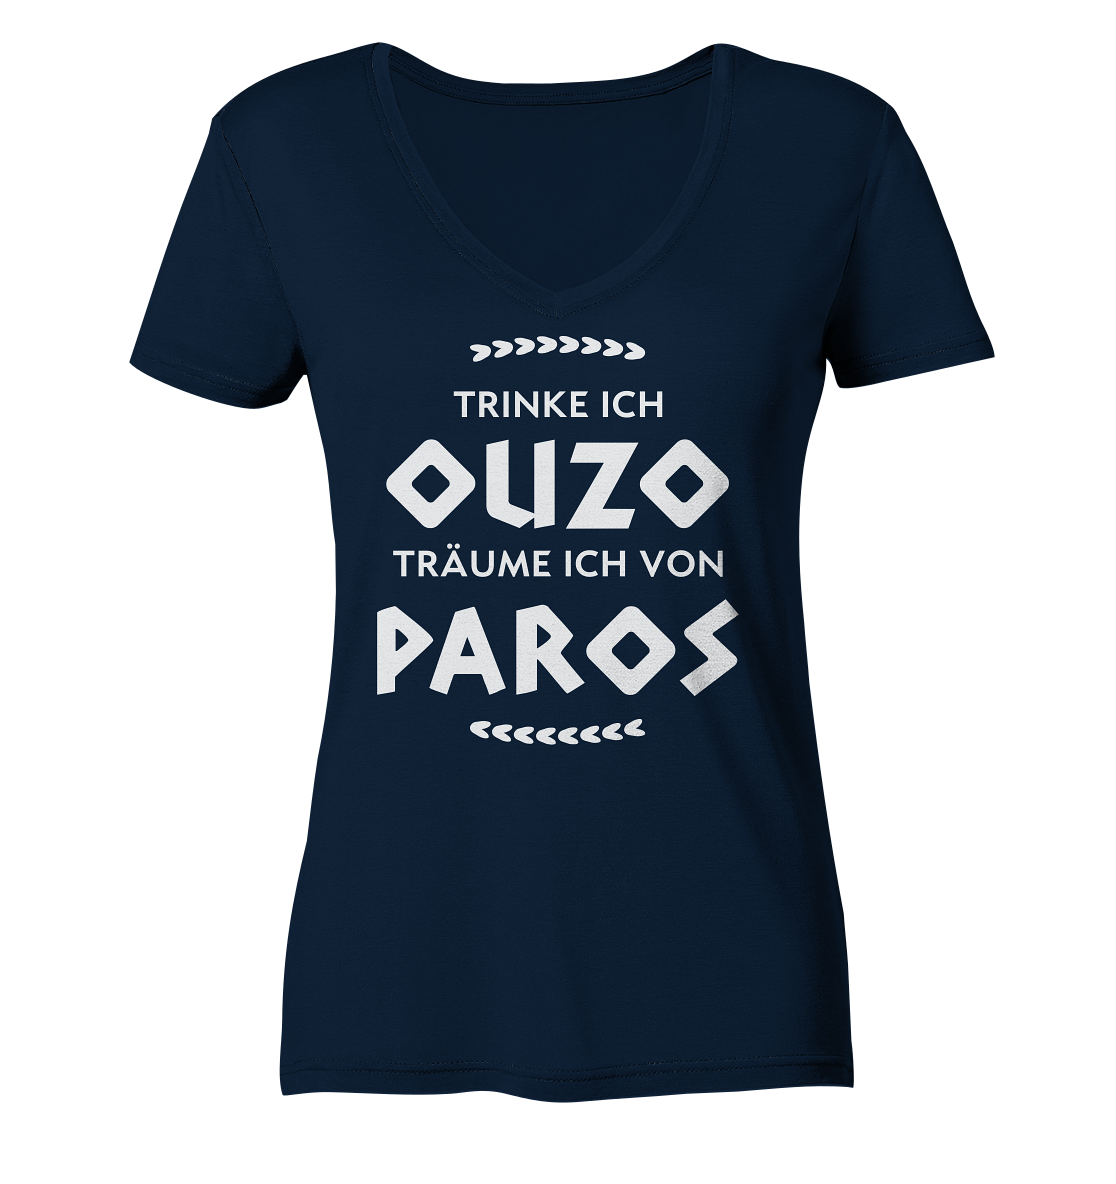 If I drink ouzo I dream of Paros - Ladies Organic V-Neck Shirt